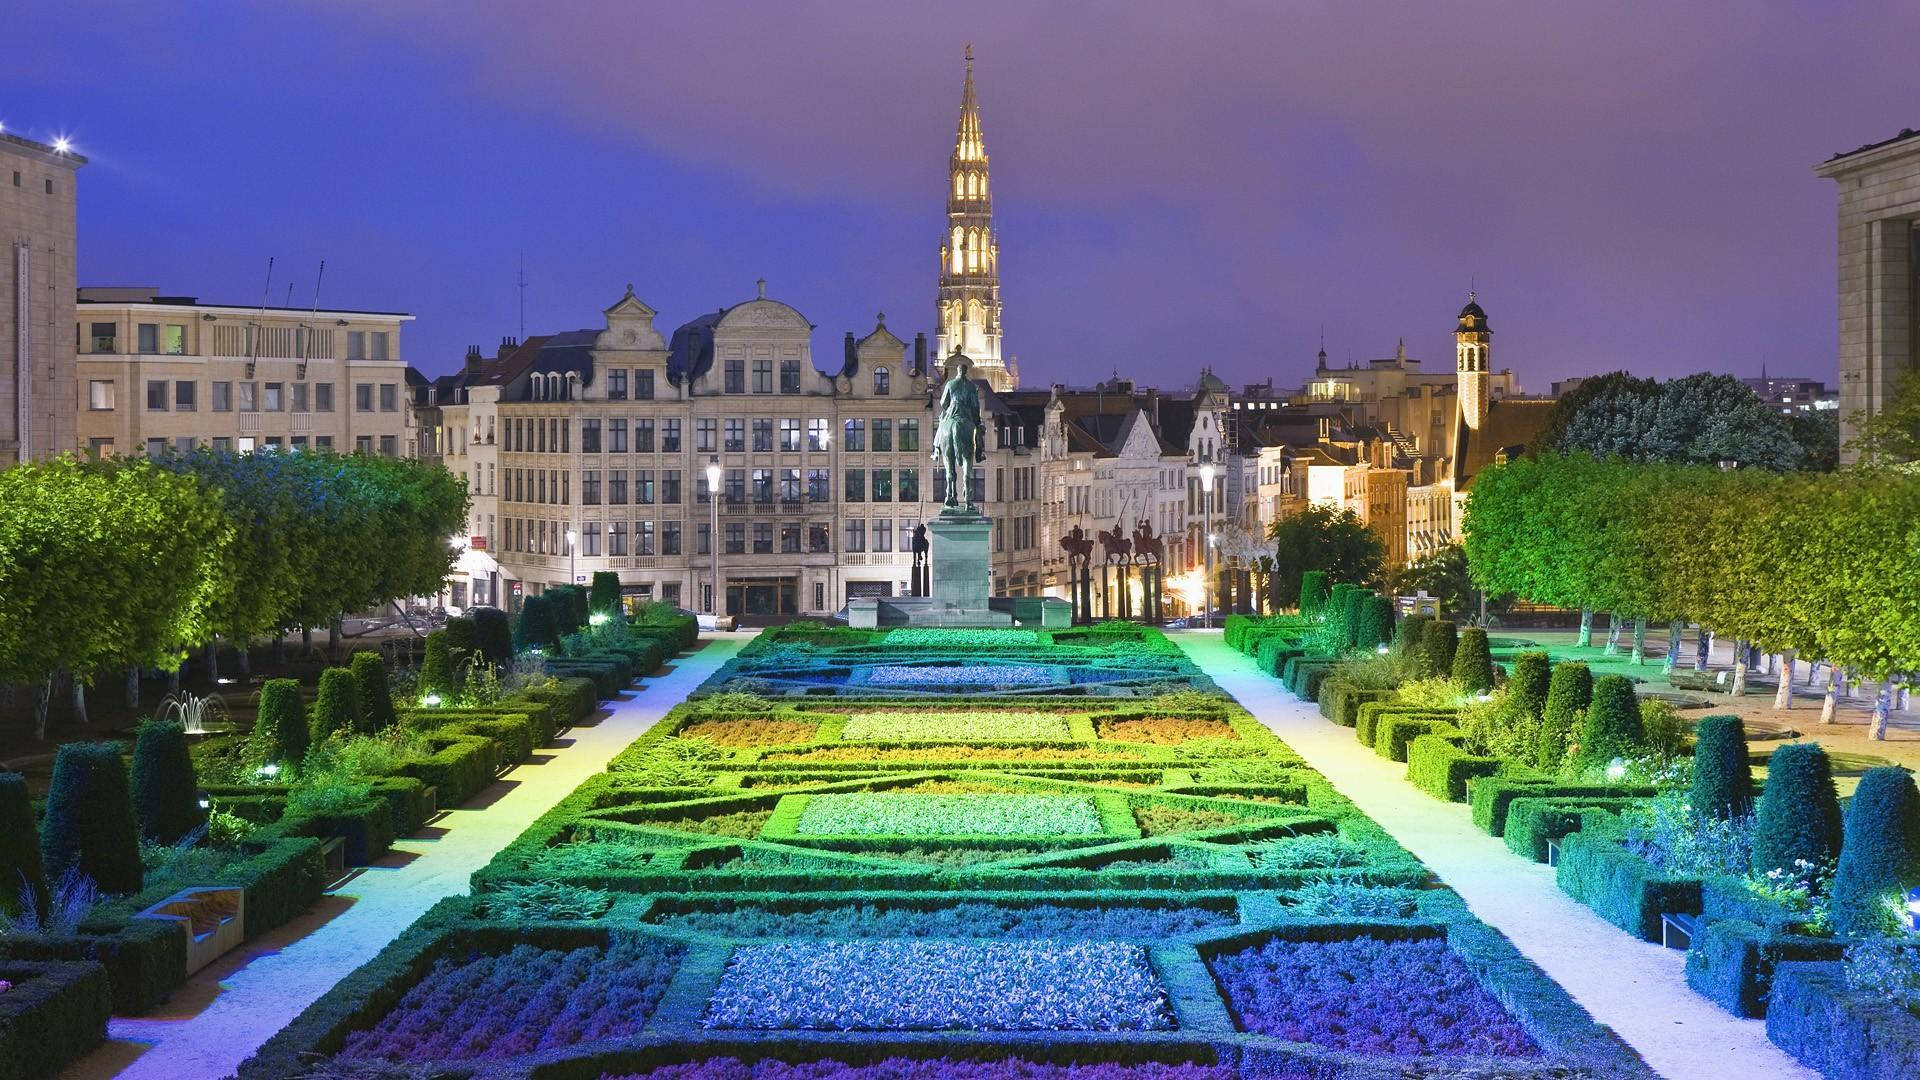 Brussels Illuminated Garden Picture